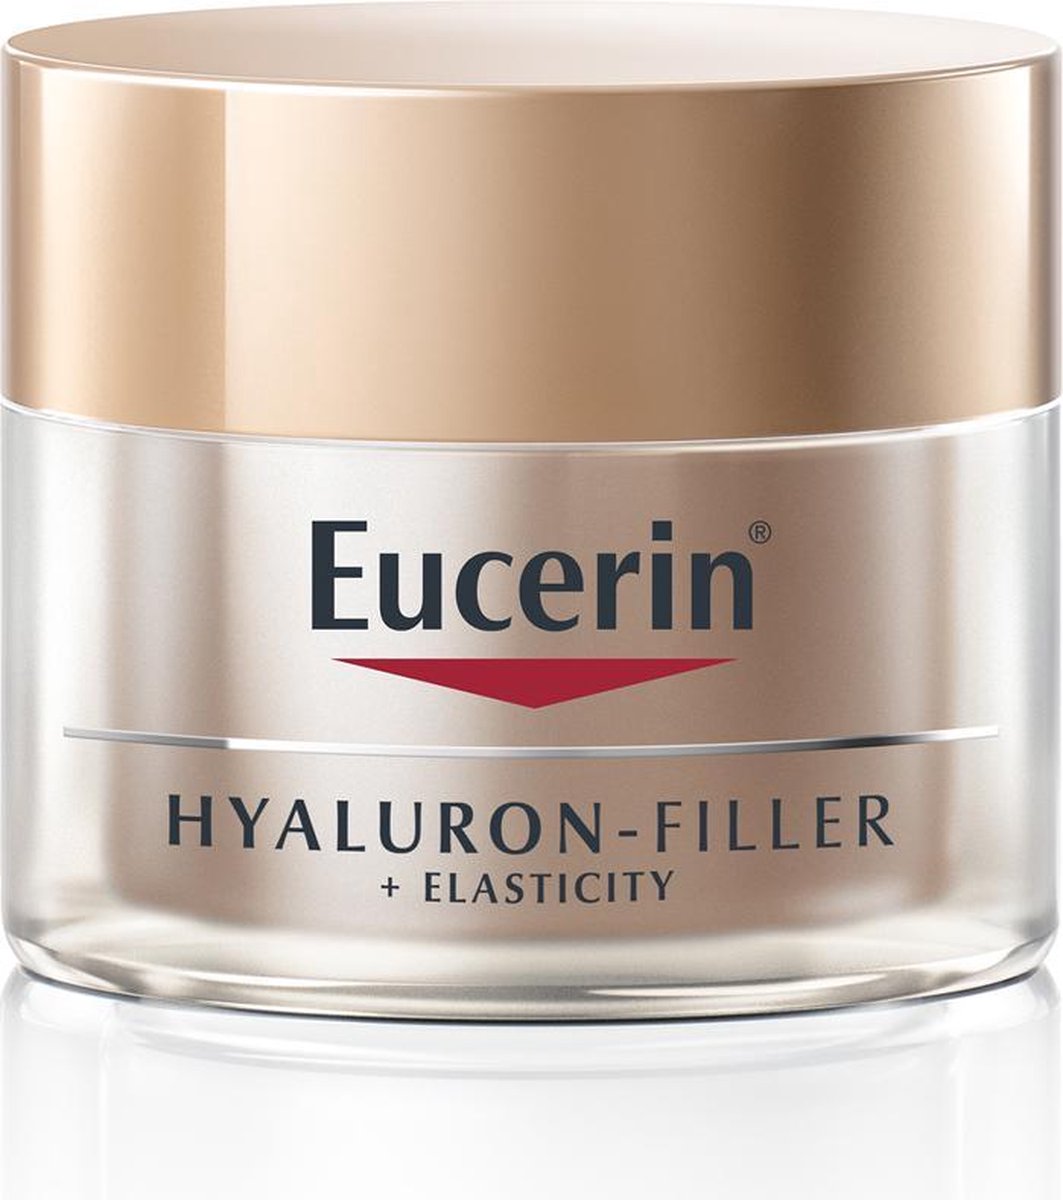 Eucerin Hyaluron-Filler + Elasticity Nachtcrème - 50 ml - Eucerin